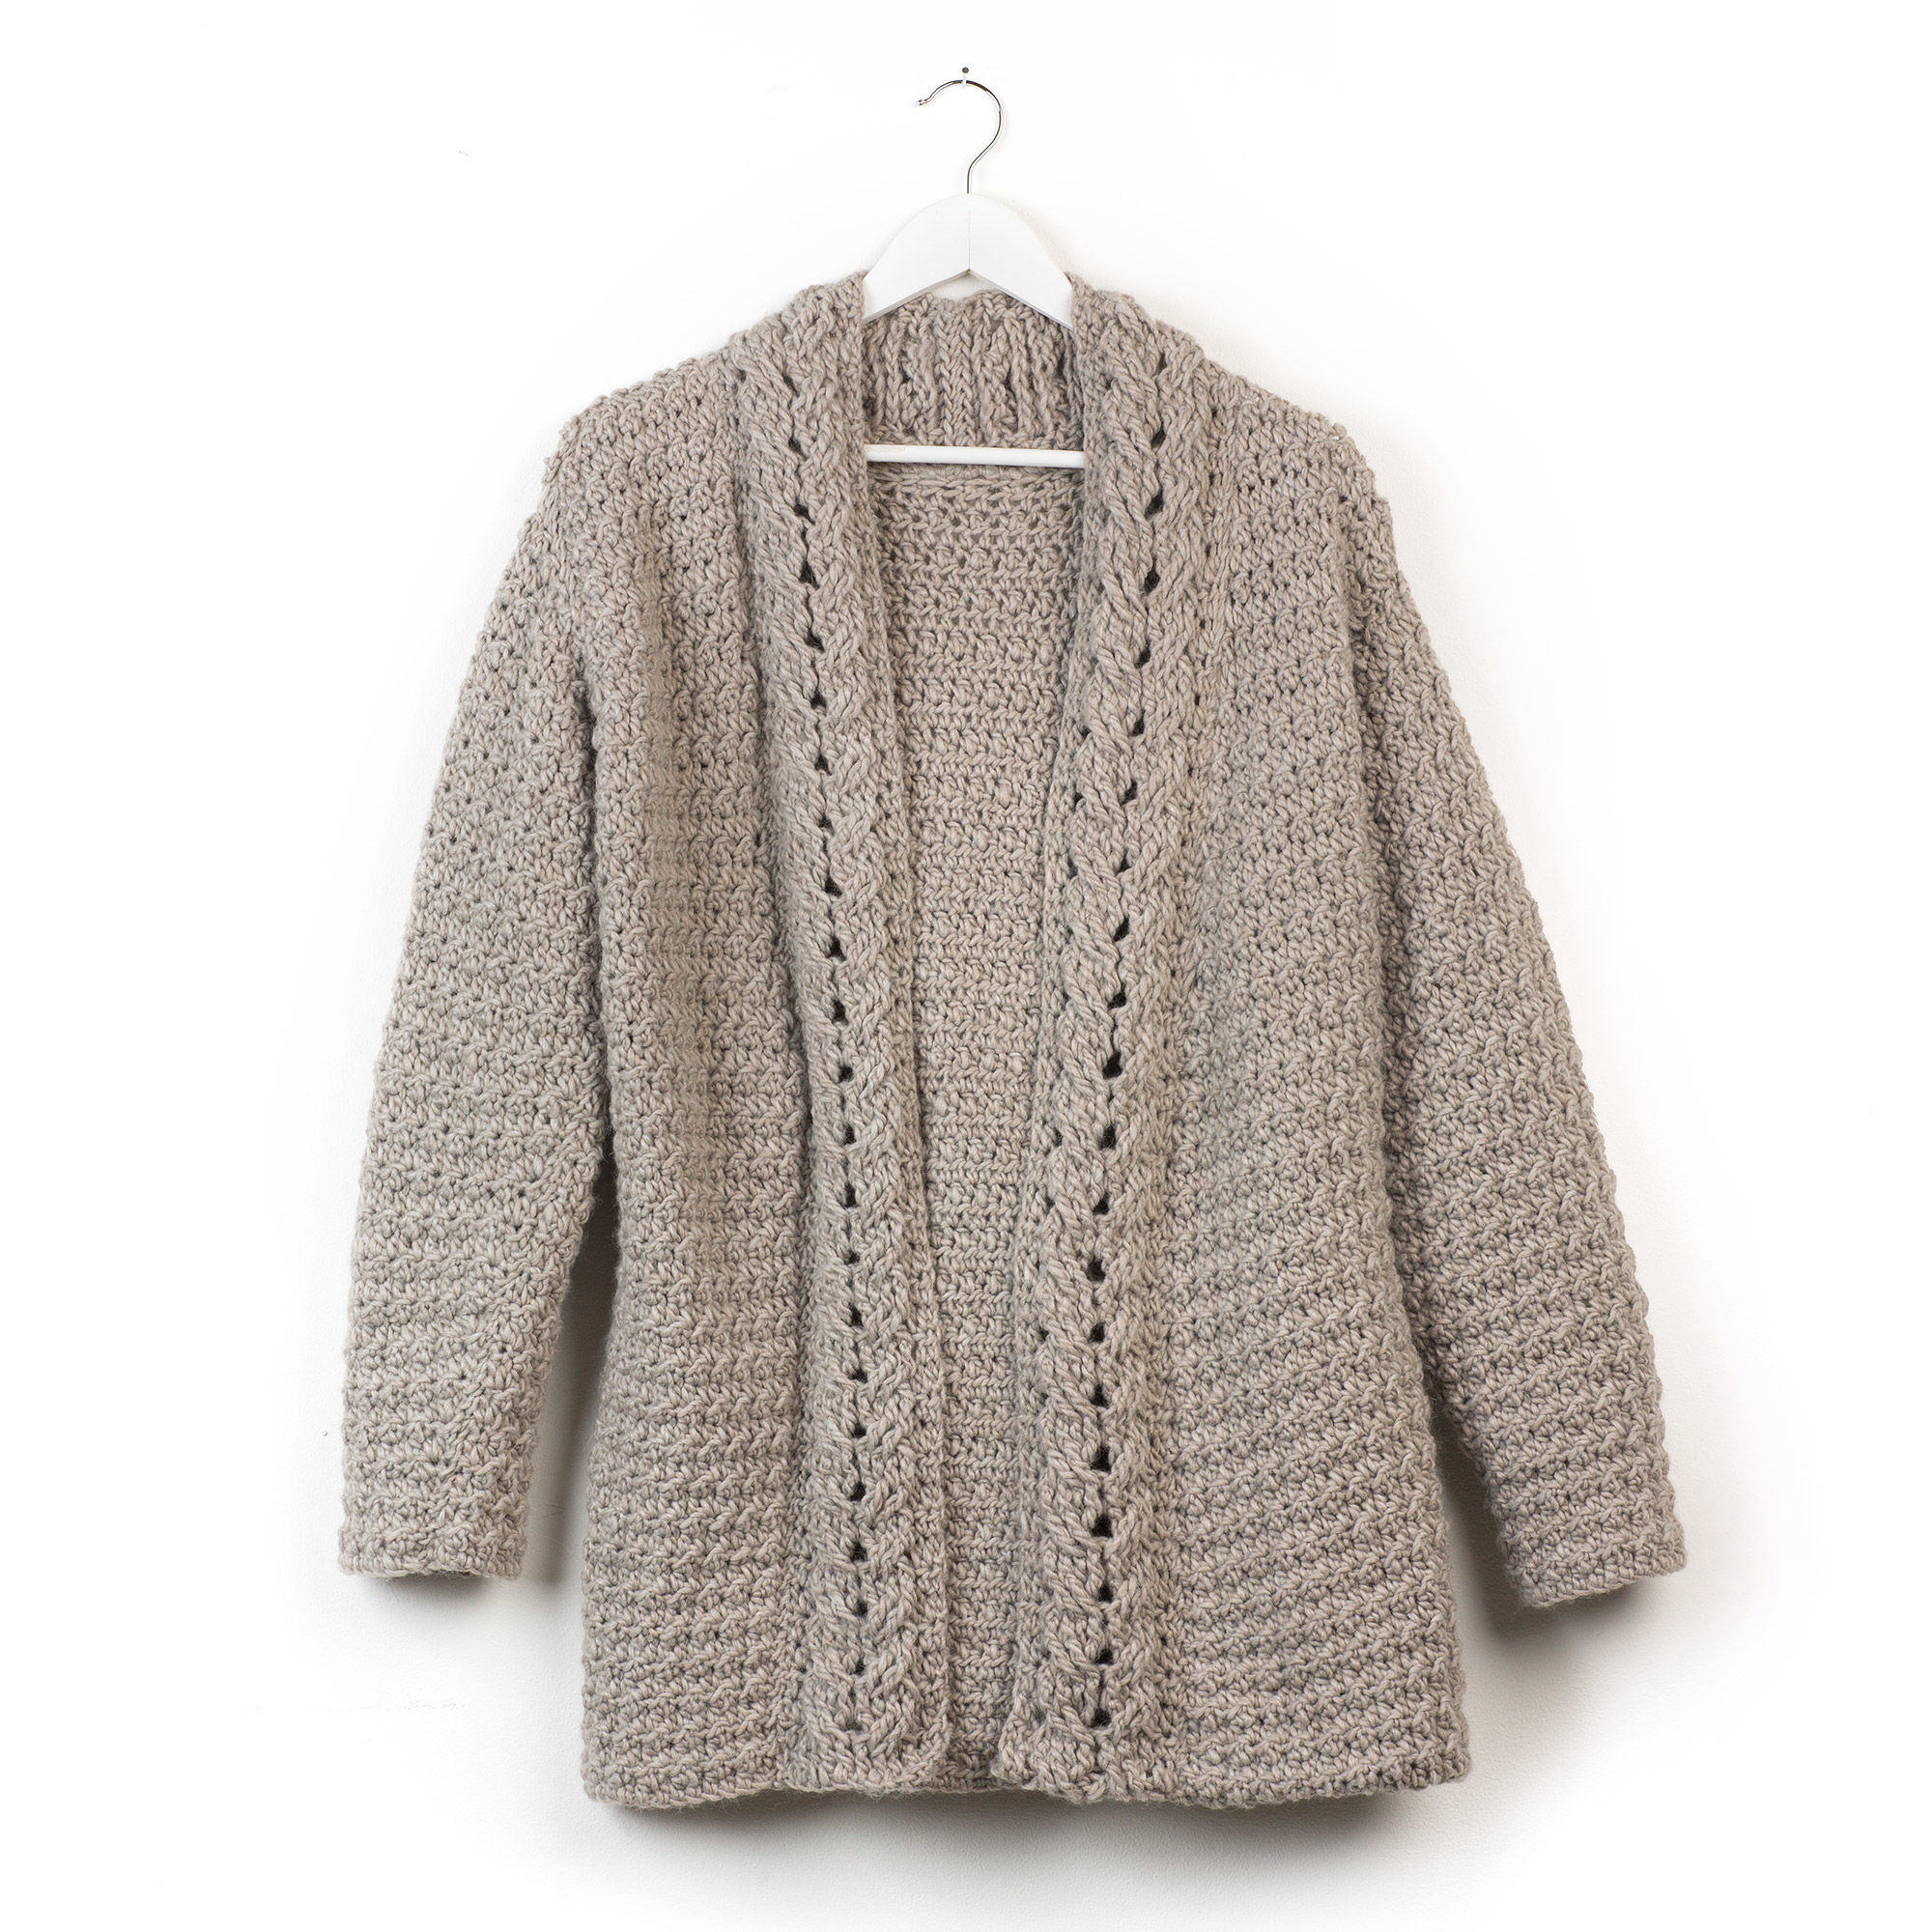 Patons Slouchy Crochet Cardigan, XS/S | Yarnspirations